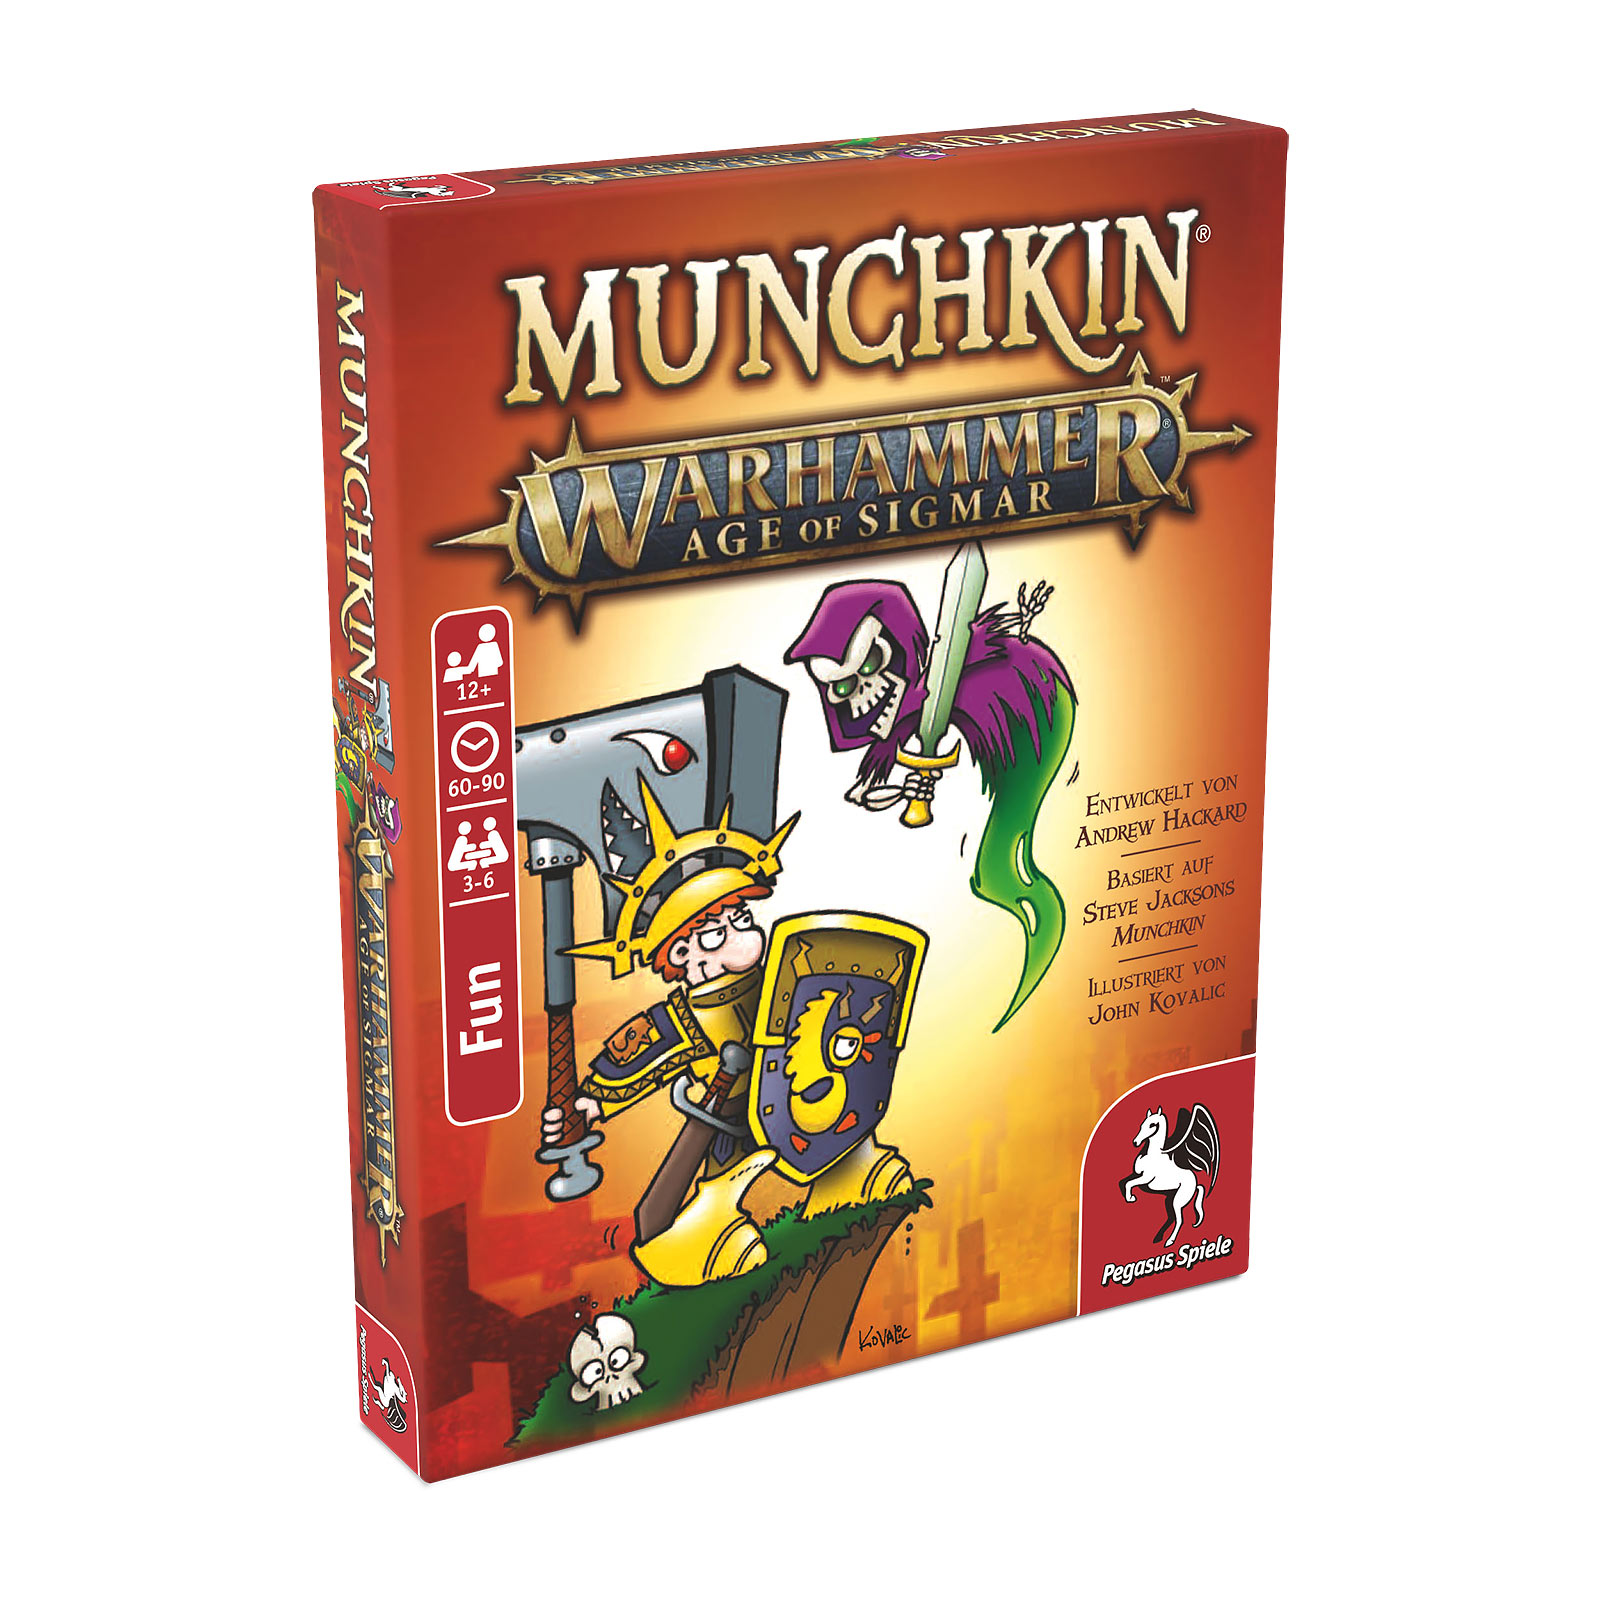 Munchkin - Warhammer Age of Sigmar Card Game